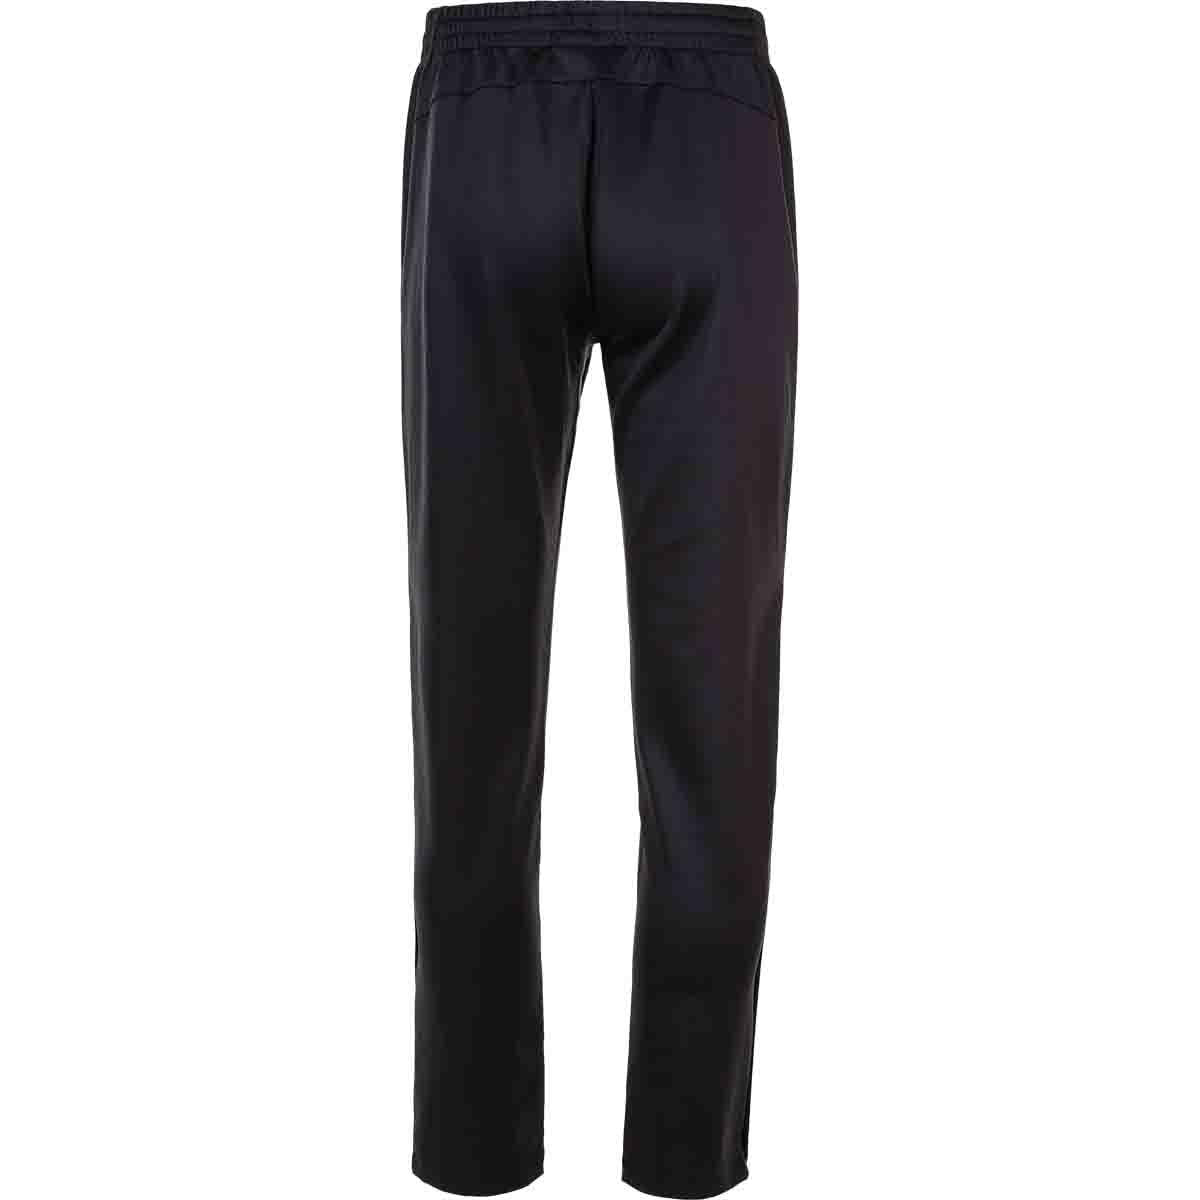 FZ Forza Plymount Womens Pants / Trousers - Black